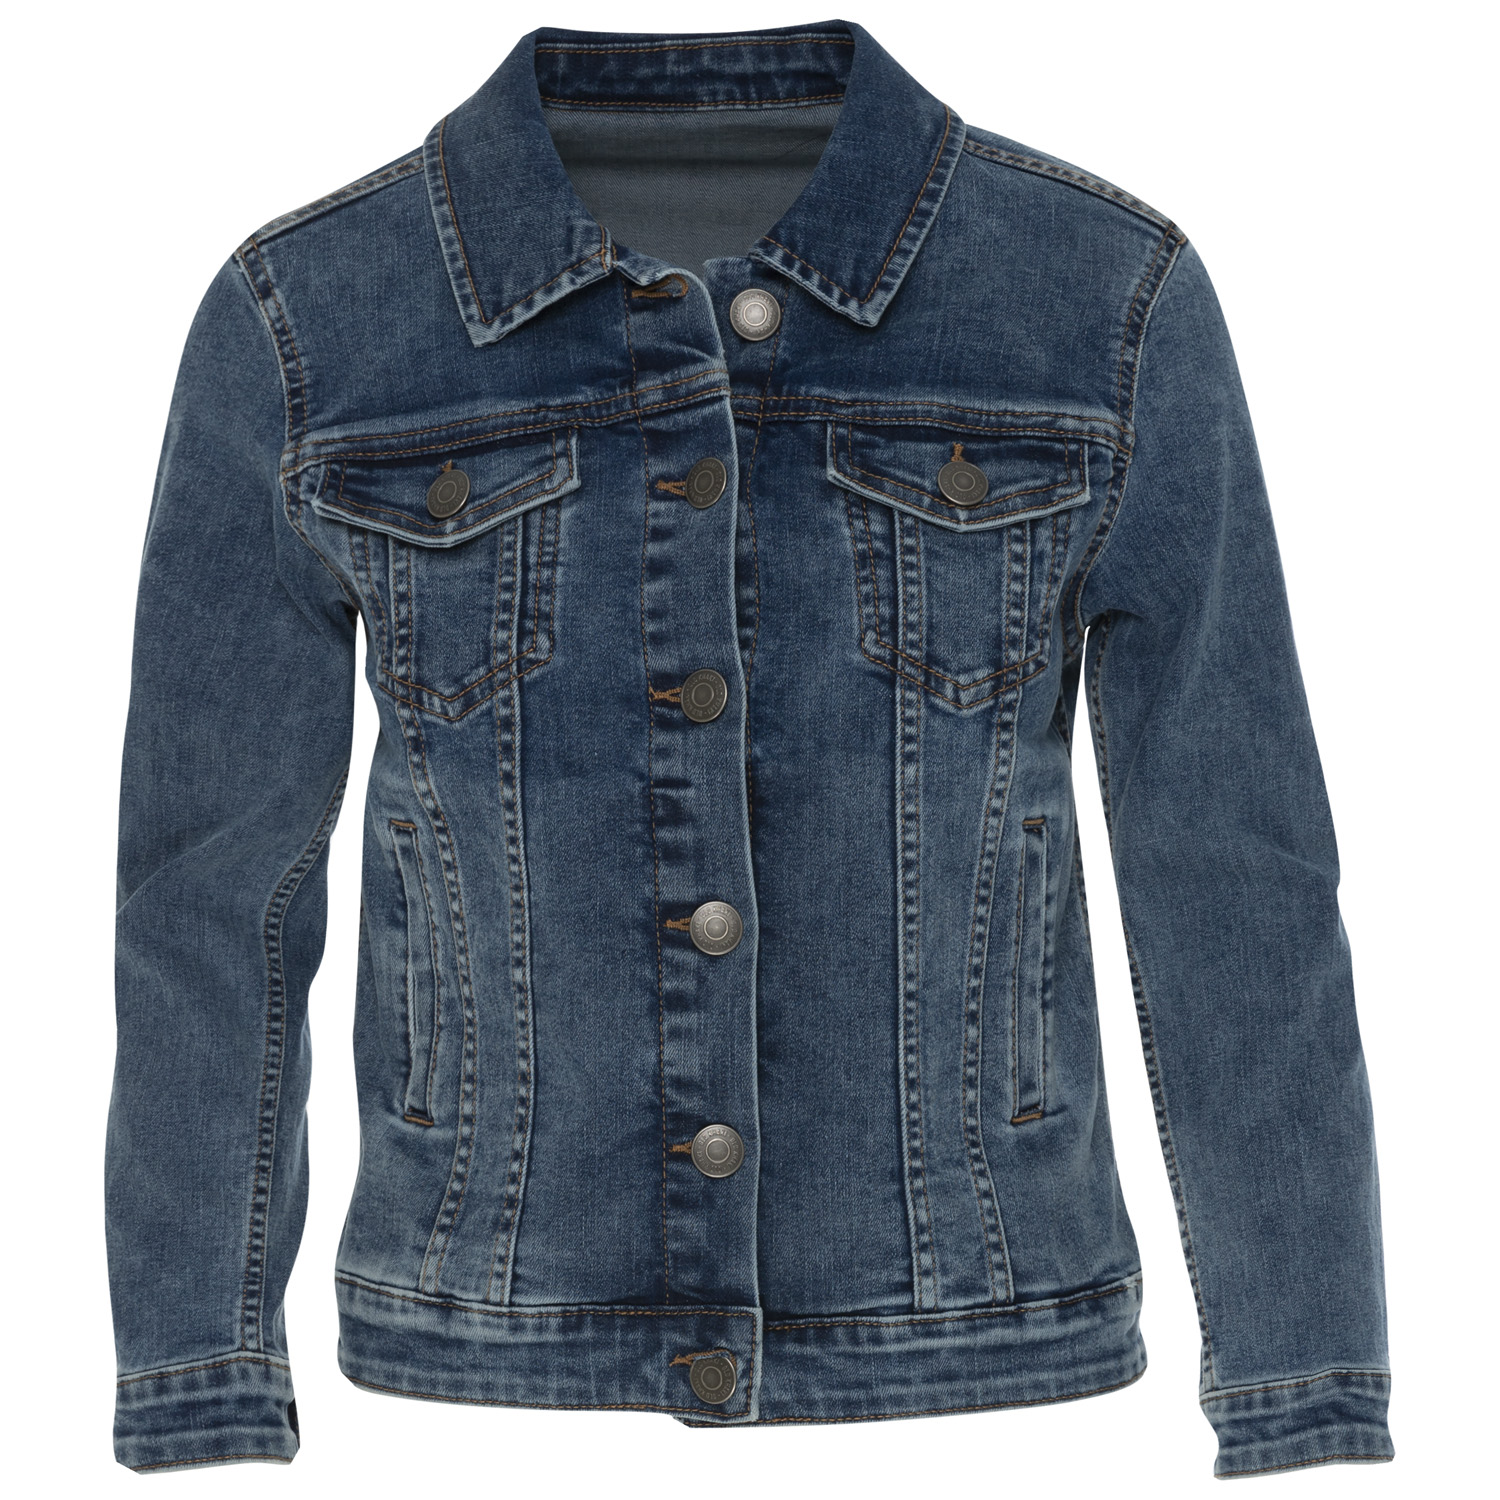 khaki jacket with blue jeans